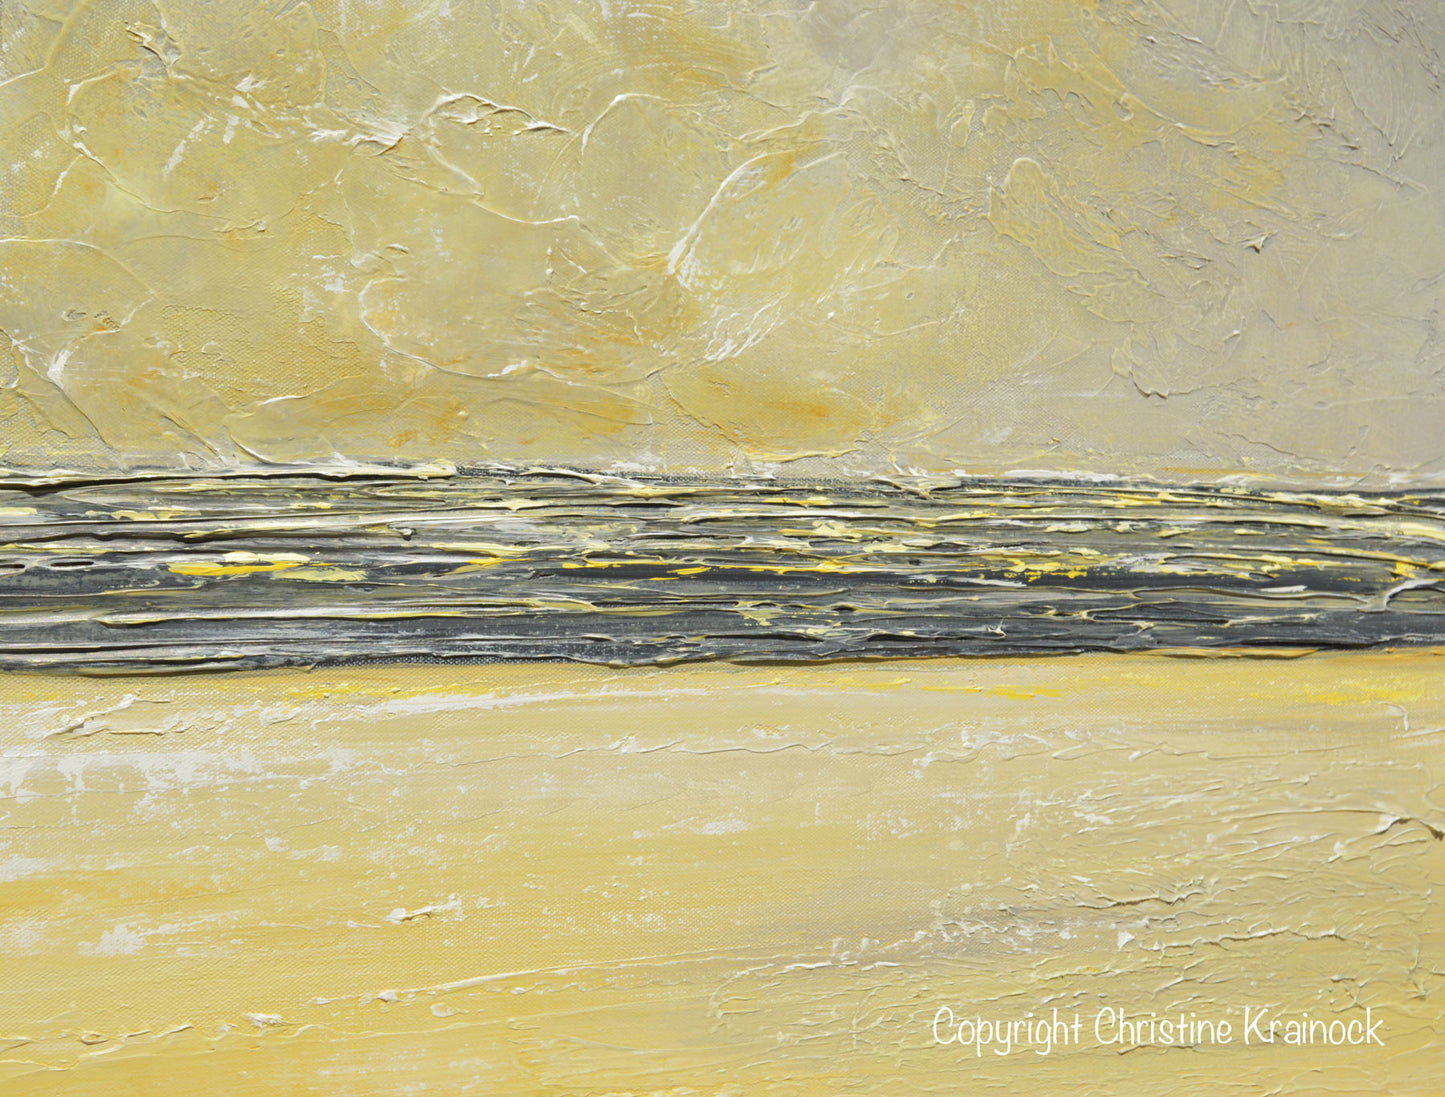 GICLEE PRINT Art Yellow Grey Abstract Painting Modern Textured Coastal Gold Wall Decor Canvas